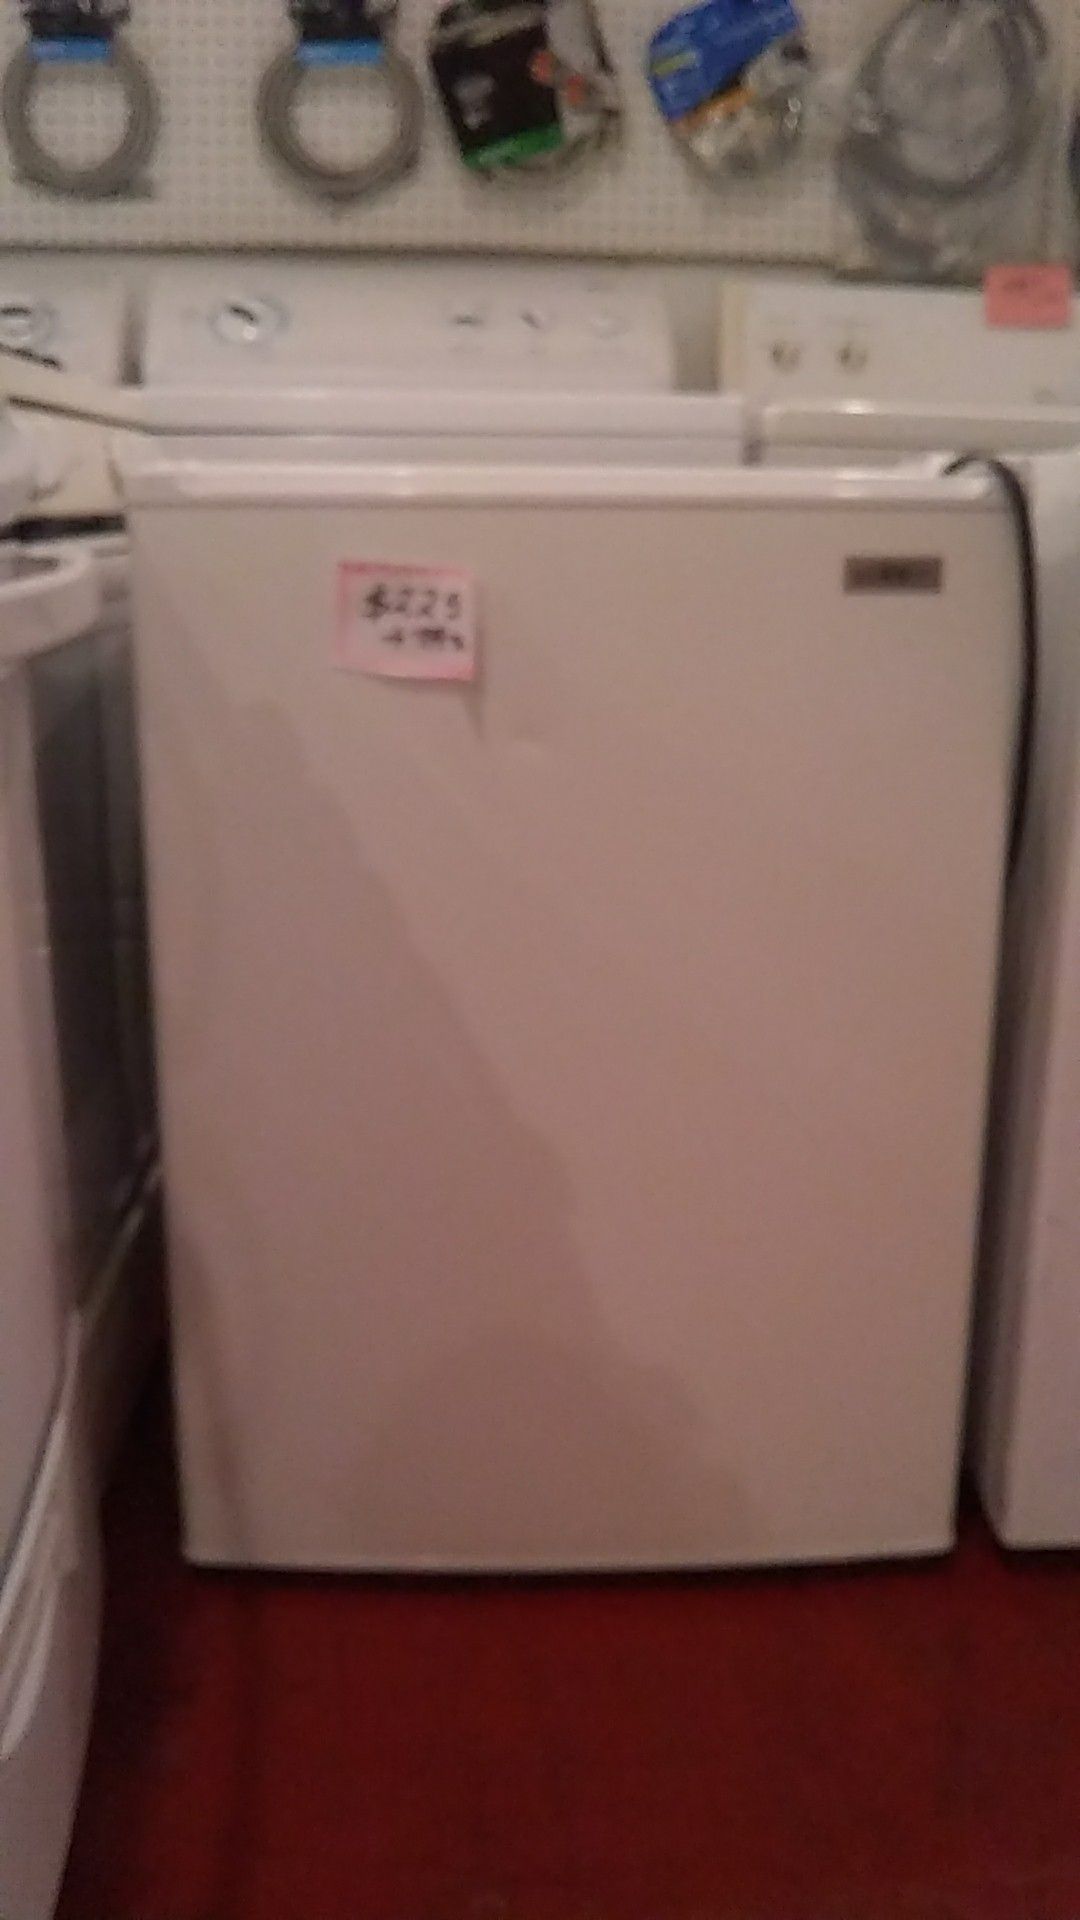 Summit refrigerator excellent condition